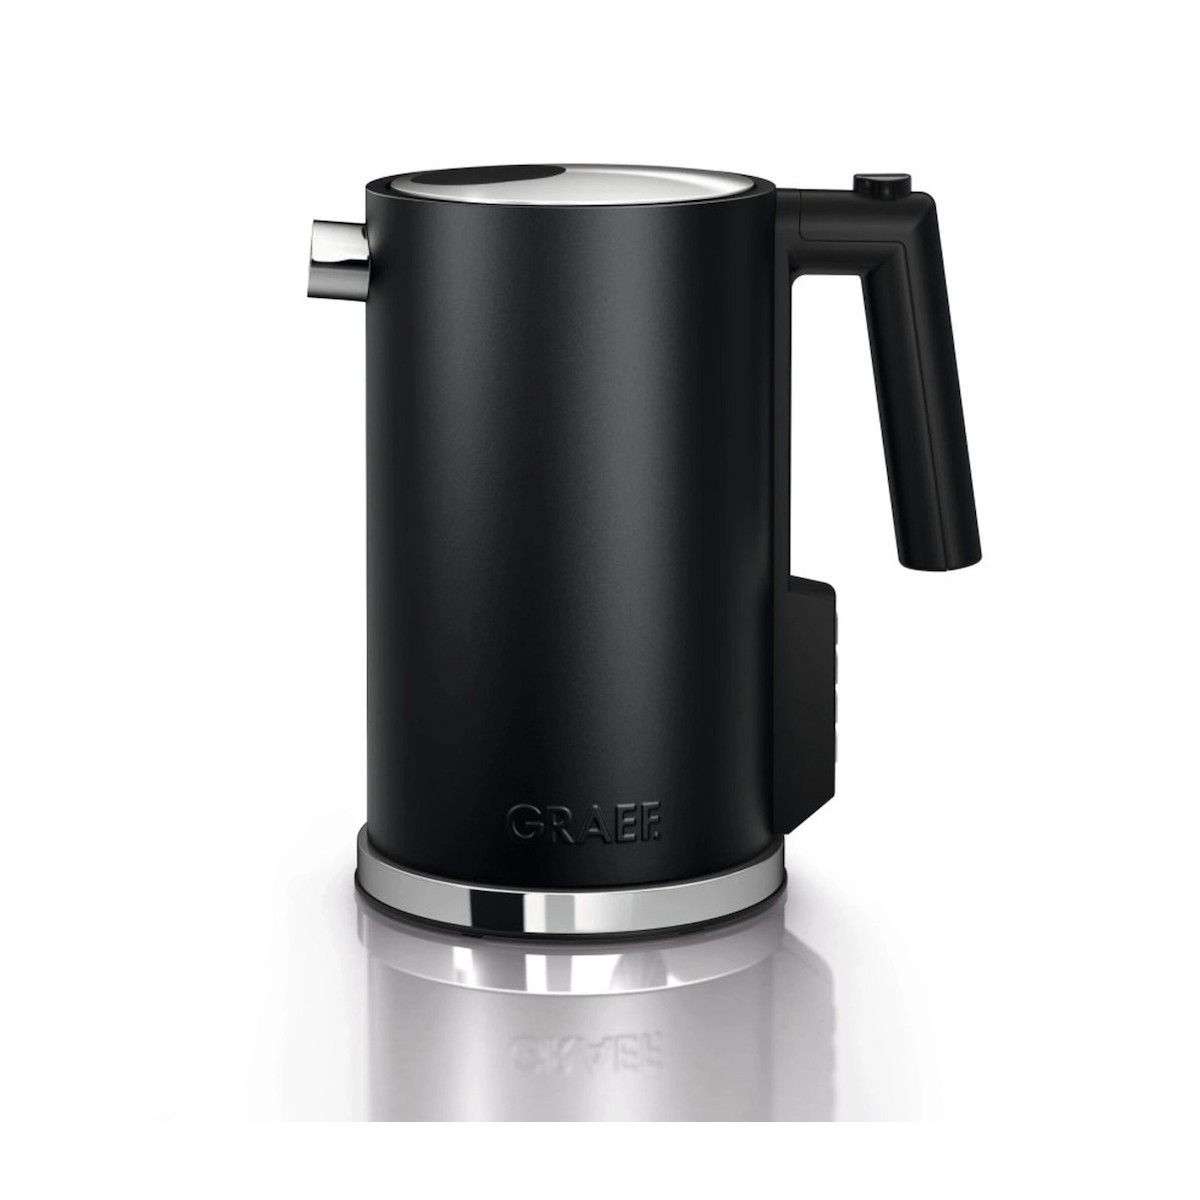 GRAEF WK902 electric kettle - black